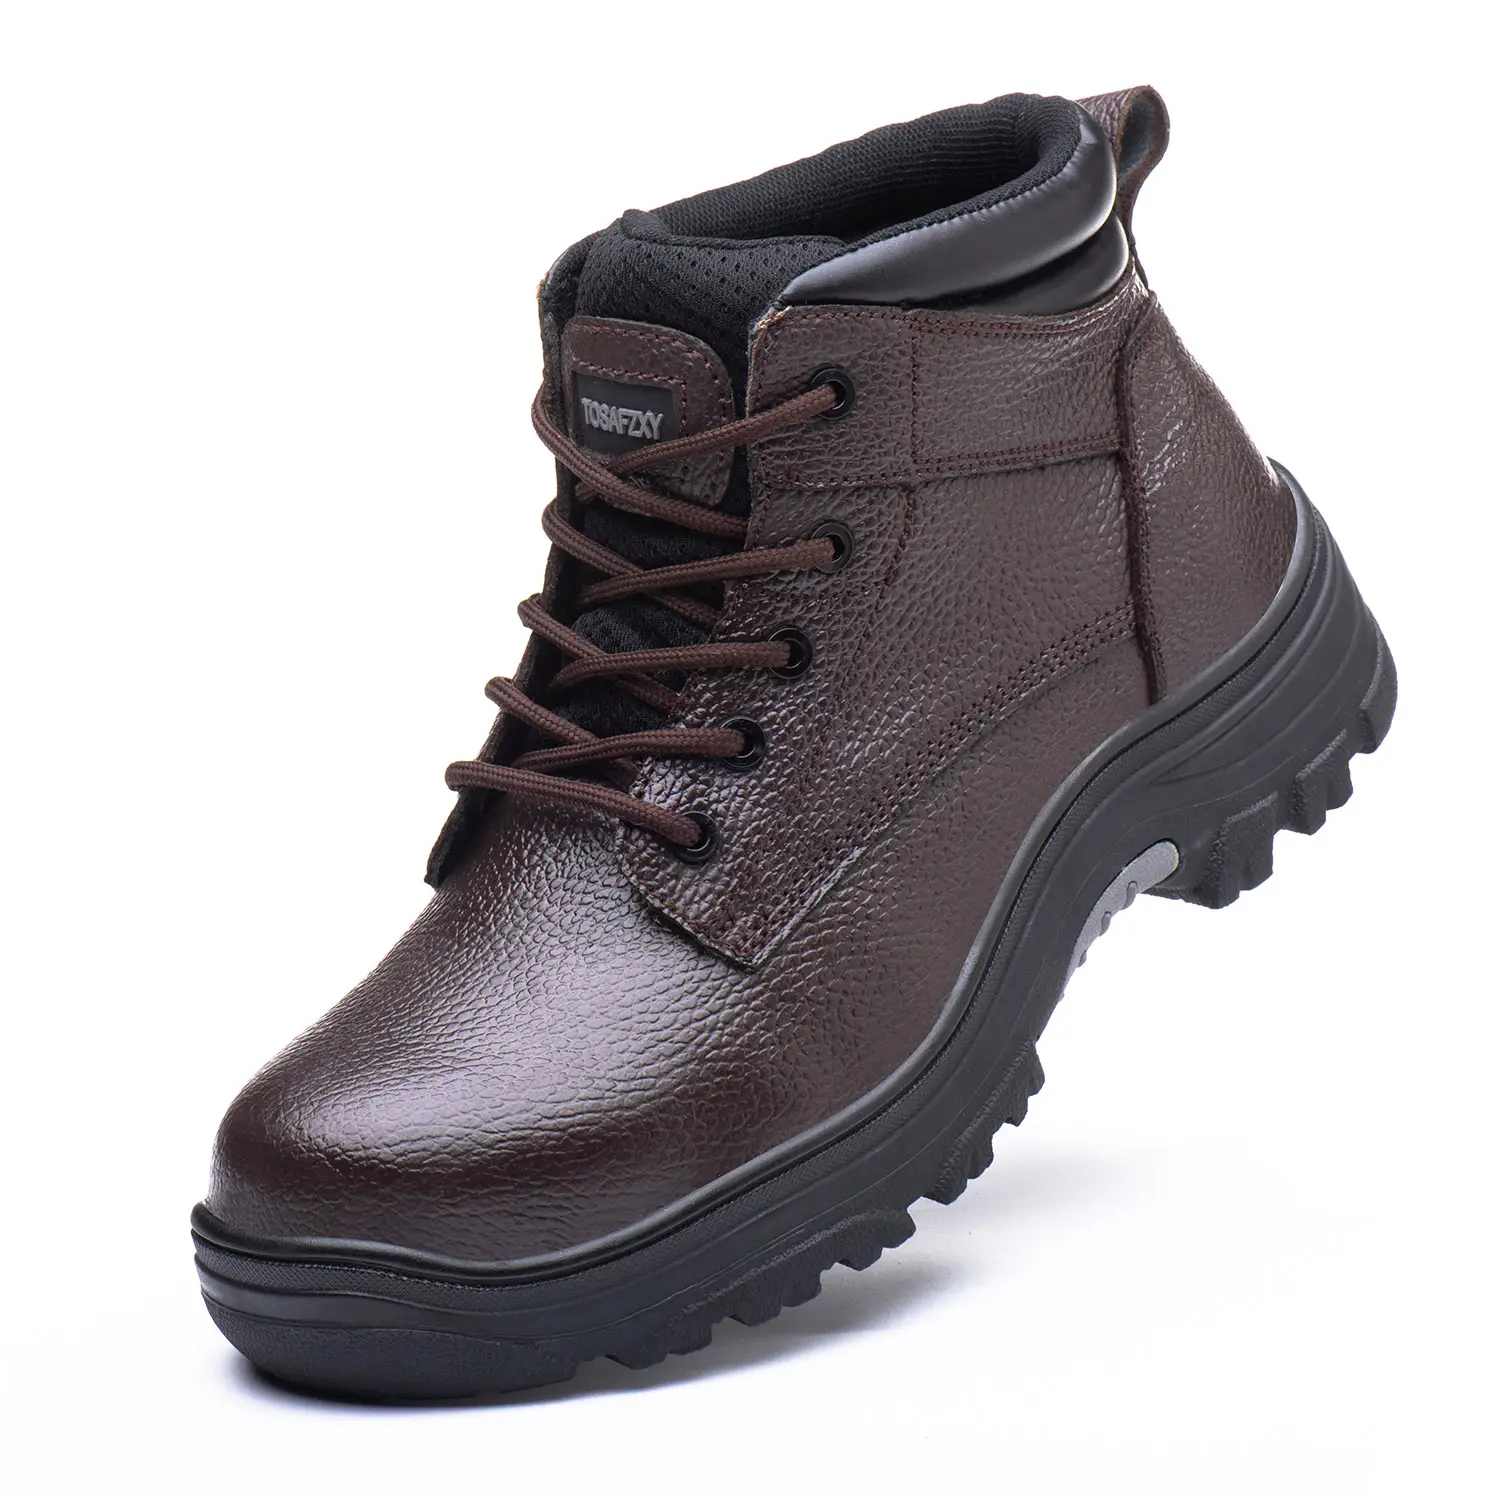 Slip resistant waterproof anti staticPlastic toe puncture proof leather engineer working safety shoes footwear ASTM-F2413